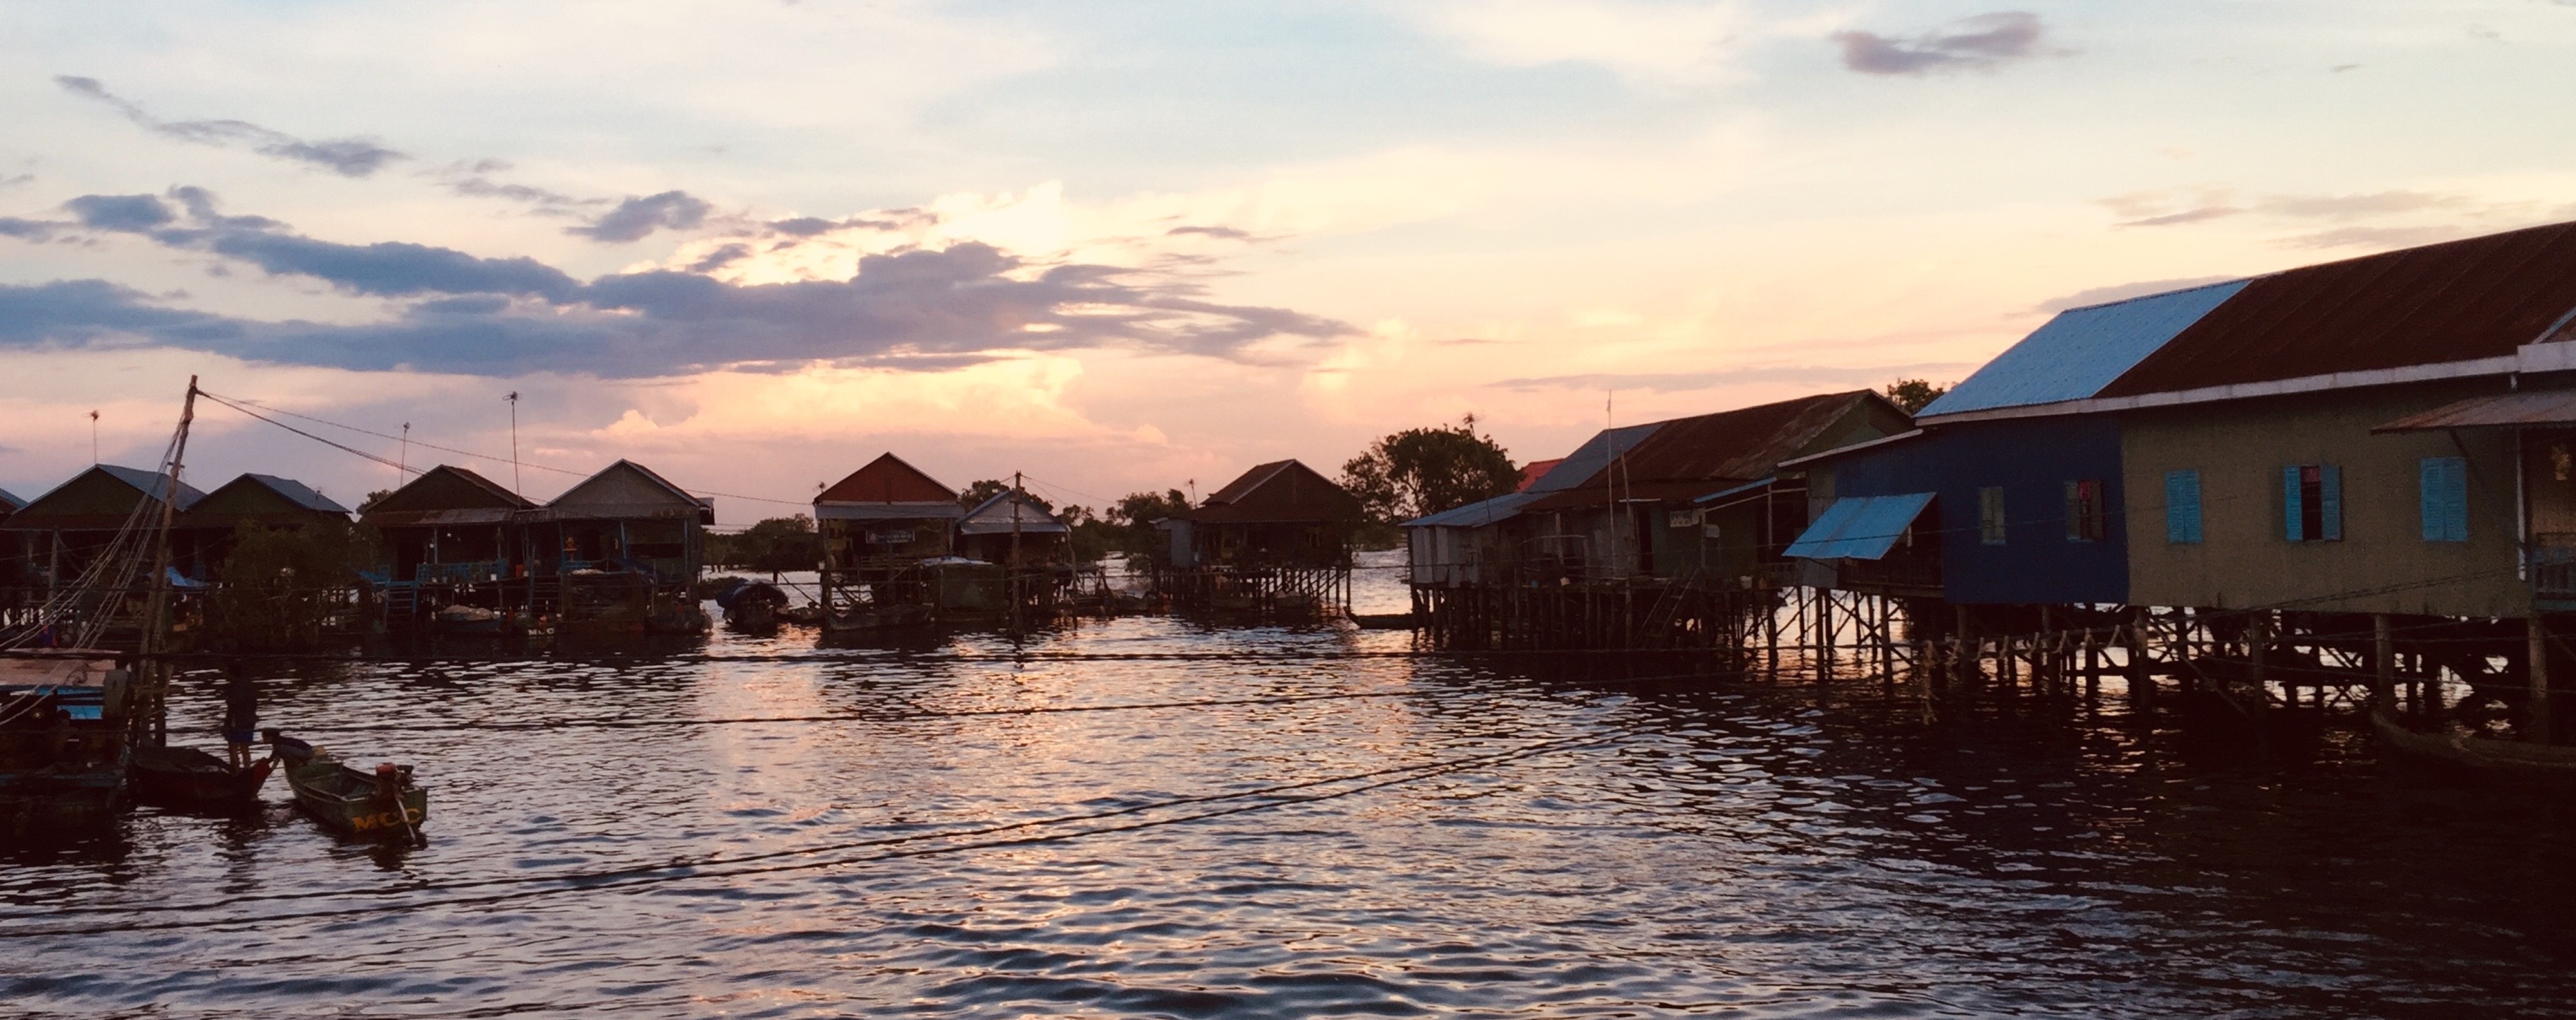 Cambodia's Tonle Sap Lake: where fishermen have no fish and no hope